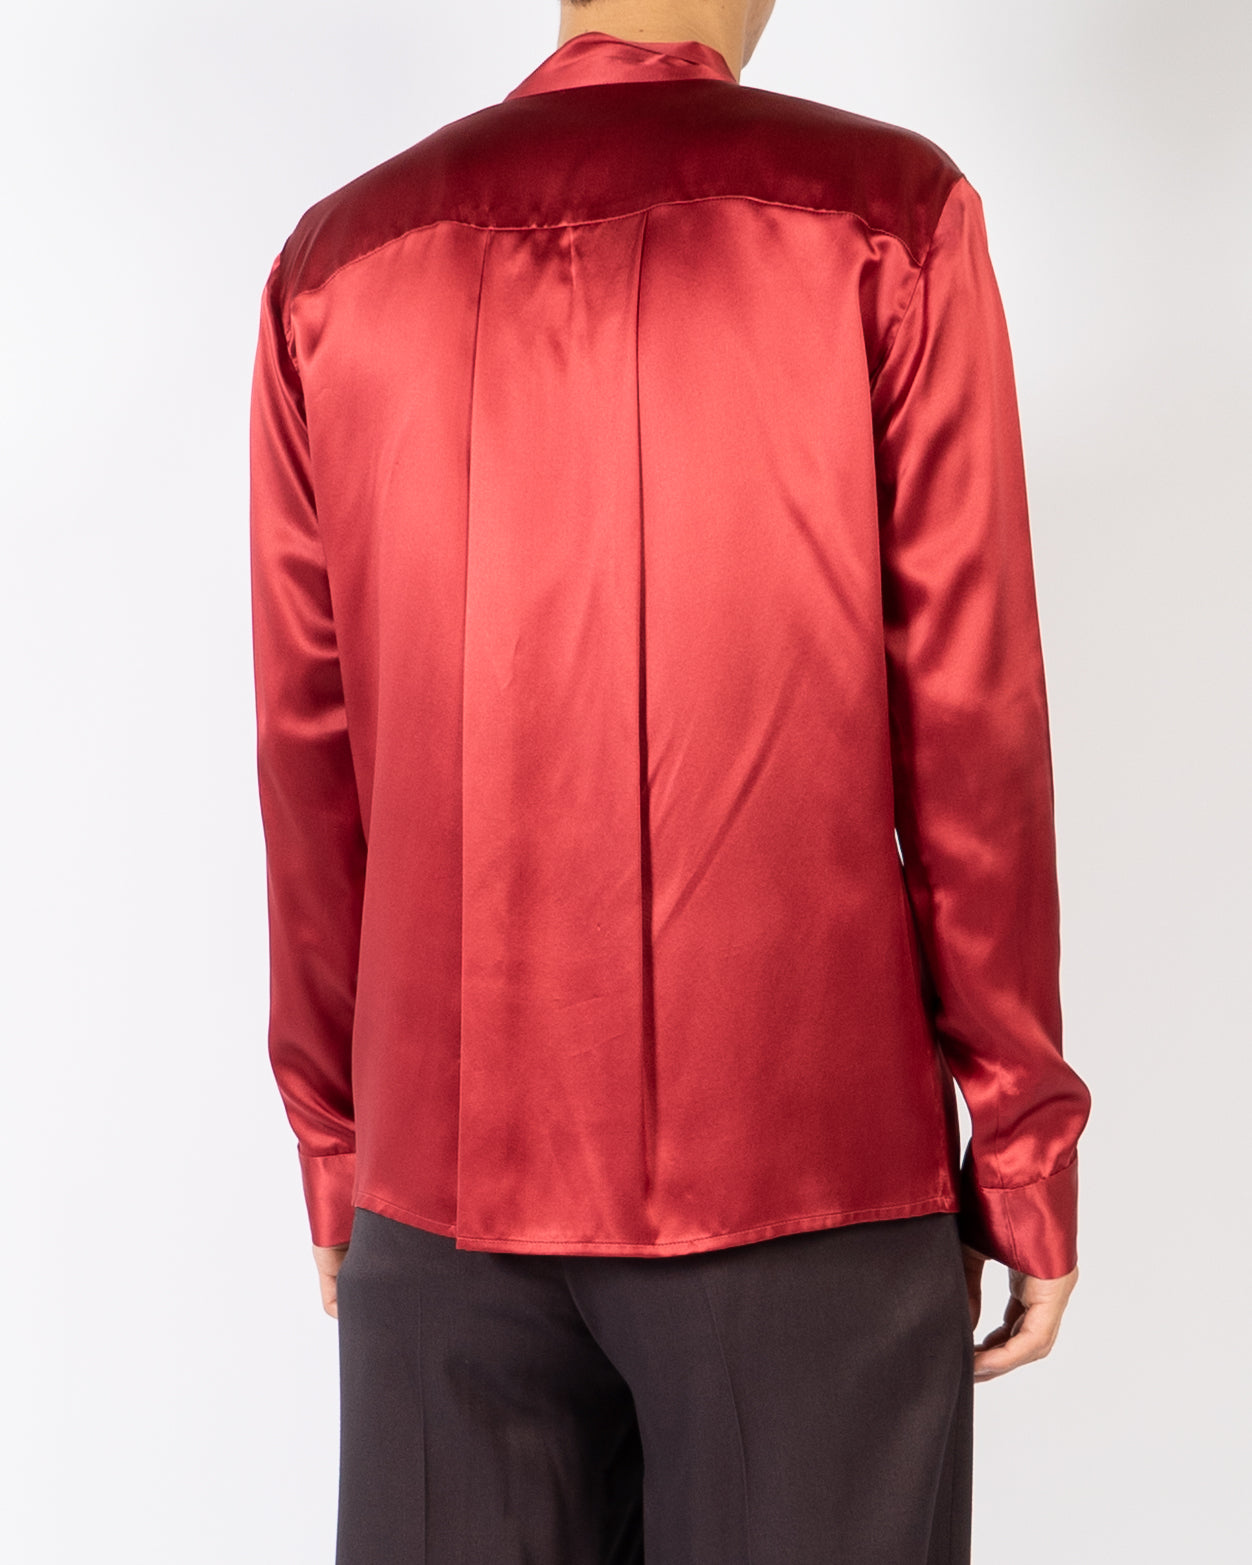 FW18 Red Backyardarchive Collar Silk – Shirt Scarf